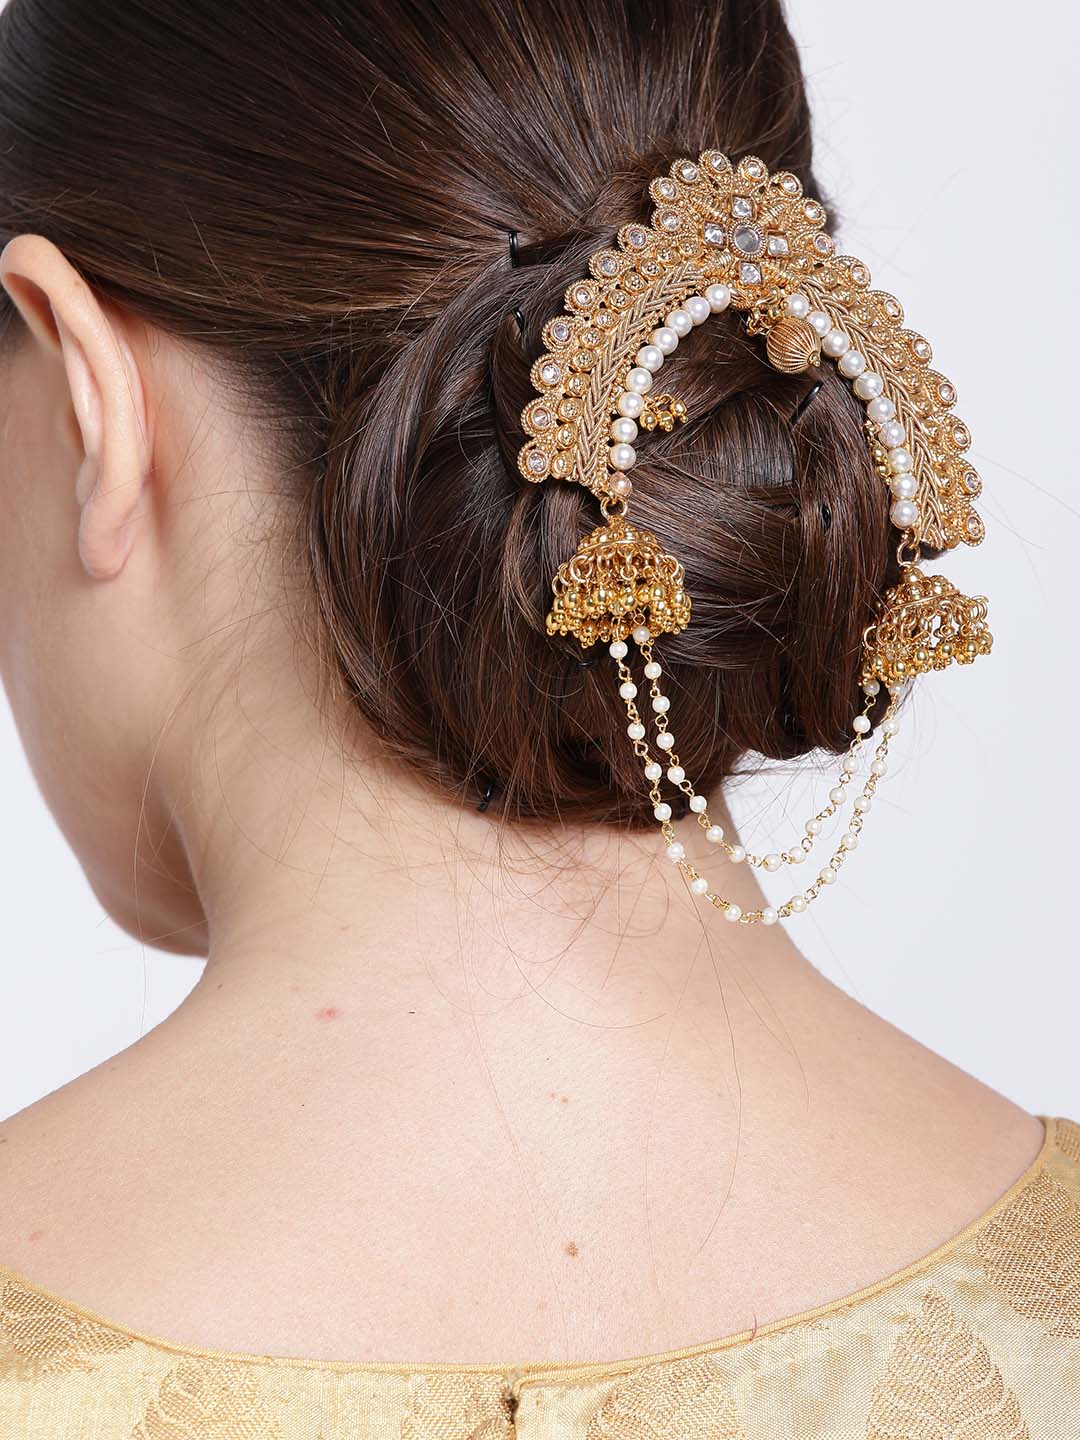 Elegant Pearl Polki Gold Plated Bun Pin/Hair Accessory